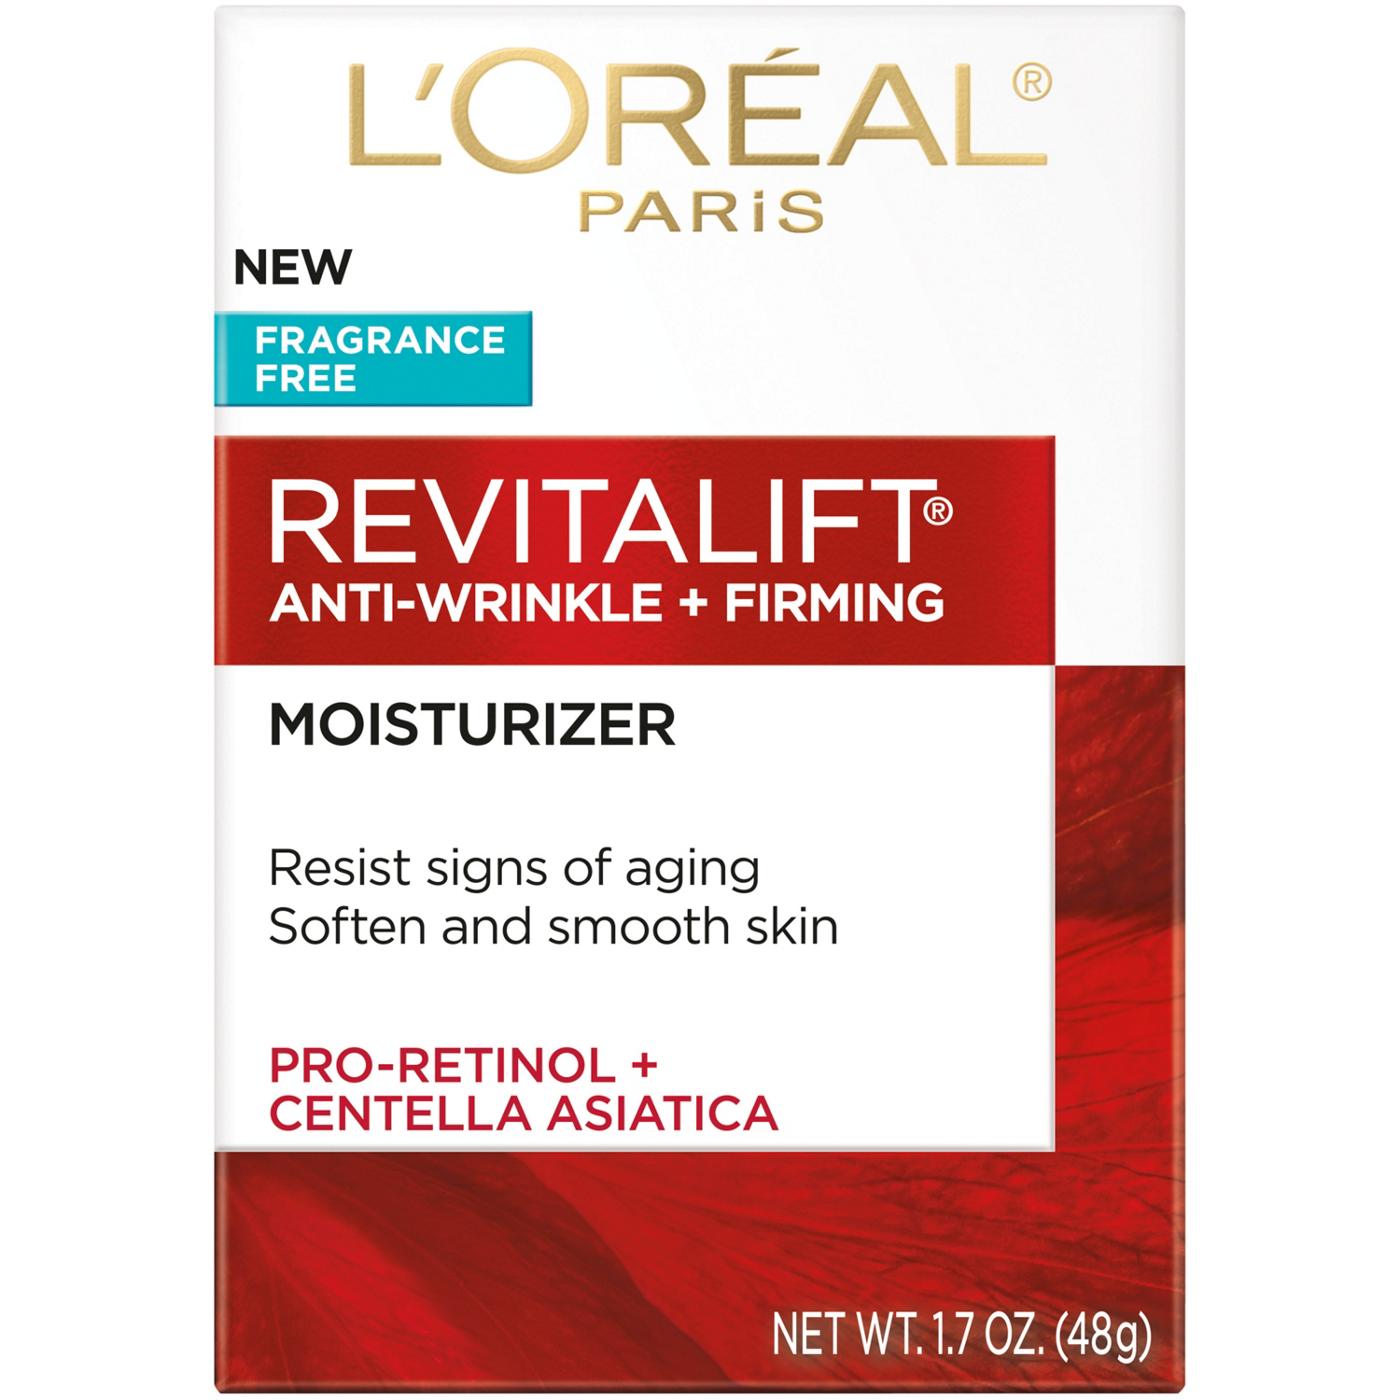 L'Oréal Paris Revitalift Anti-Aging Face and Neck Cream Fragrance Free; image 1 of 8